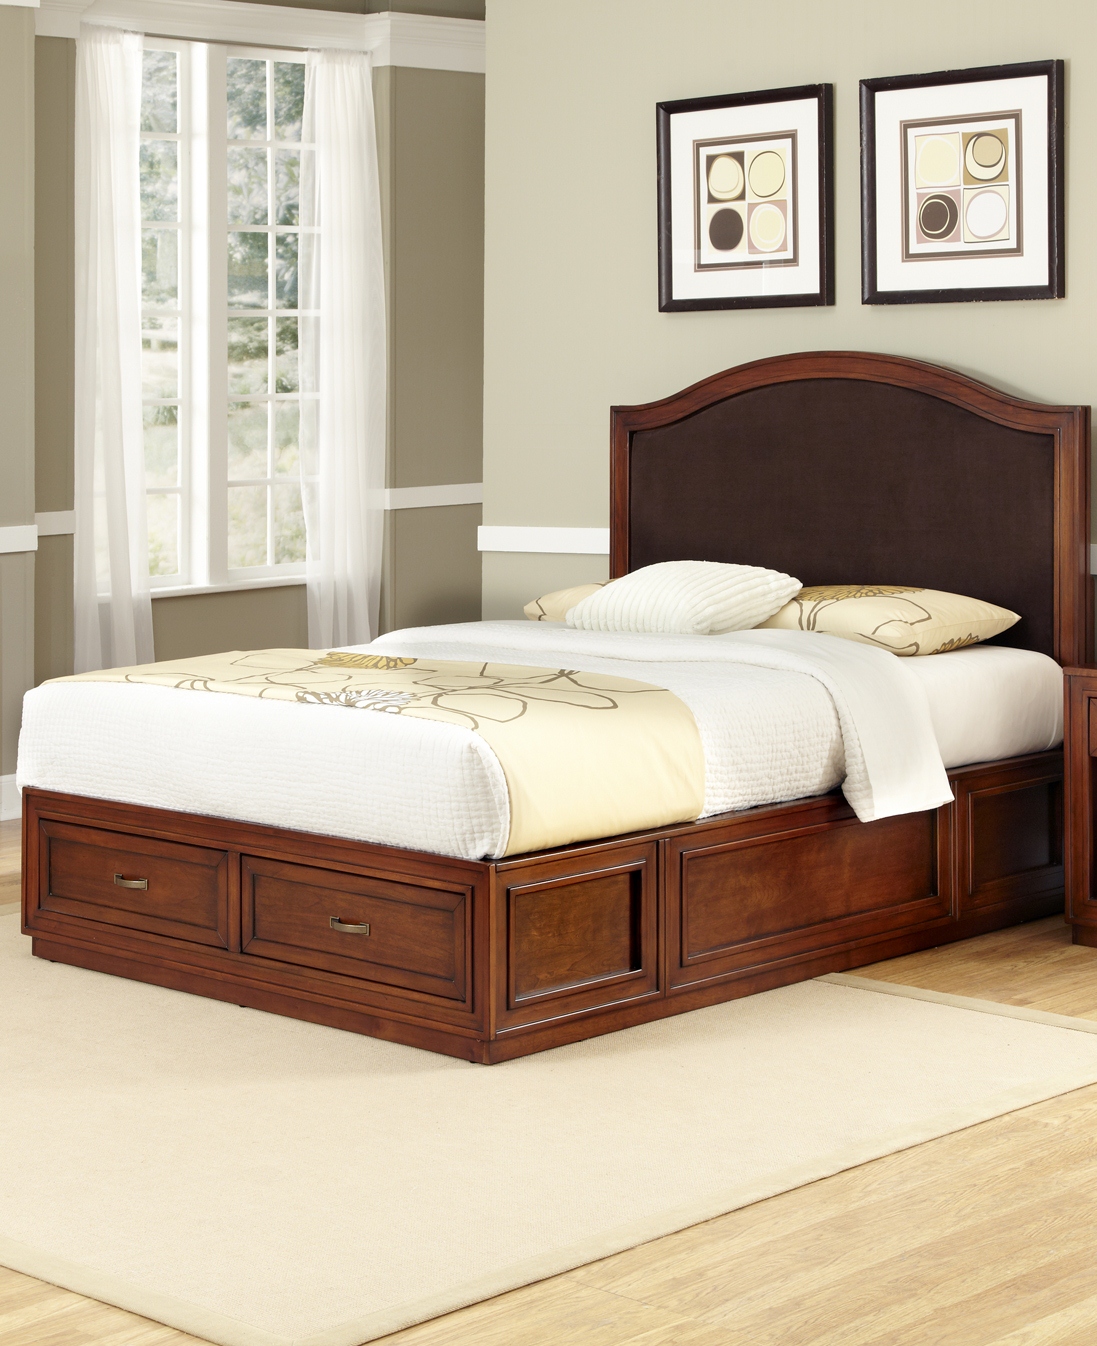 Home Styles Furniture Duet Platform King Bed Camelback Brown Microfiber Inset